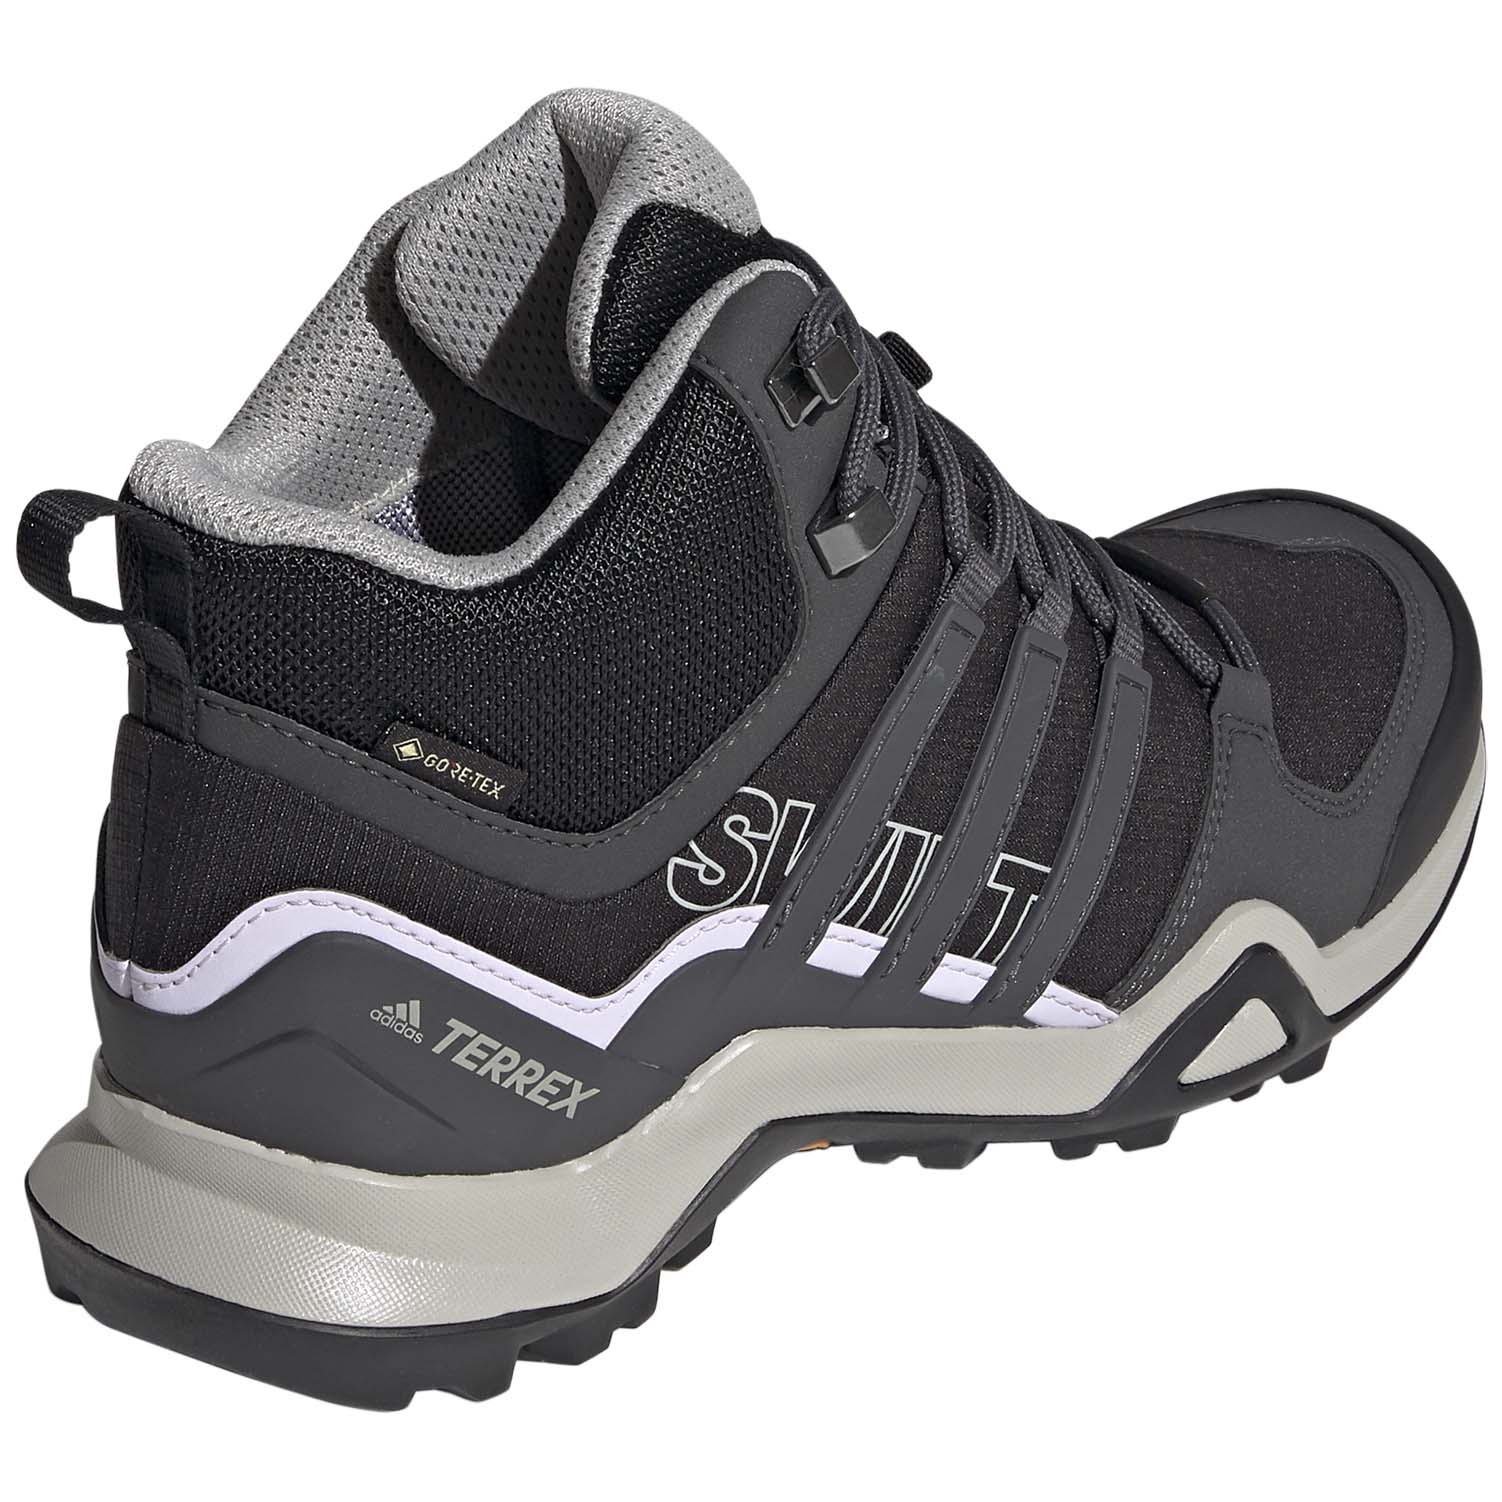 Adidas Terrex Swift R2 Mid GTX Women's Walking Shoes